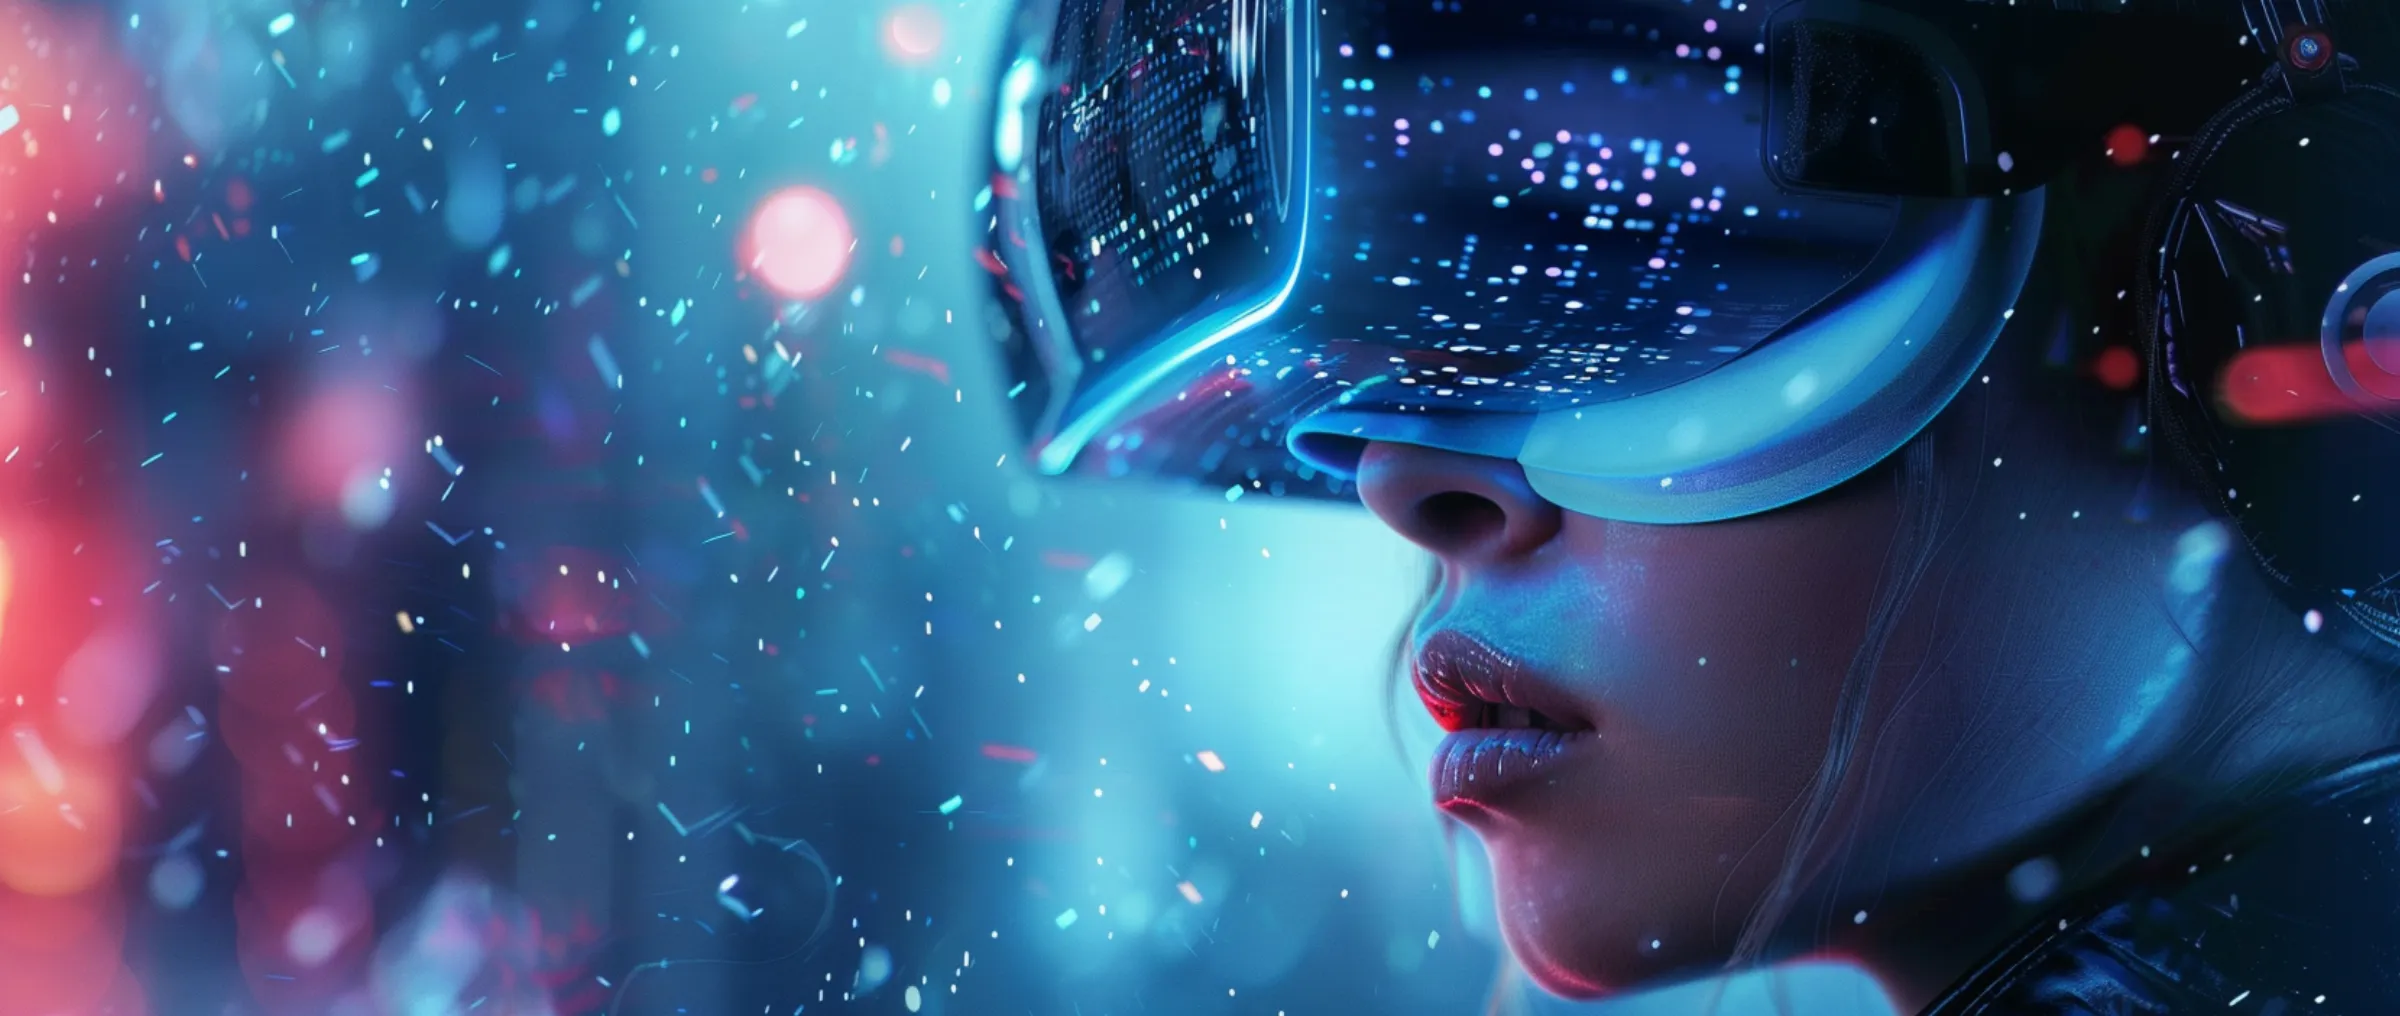 Meta has allocated $2.8 billion for the development of virtual reality